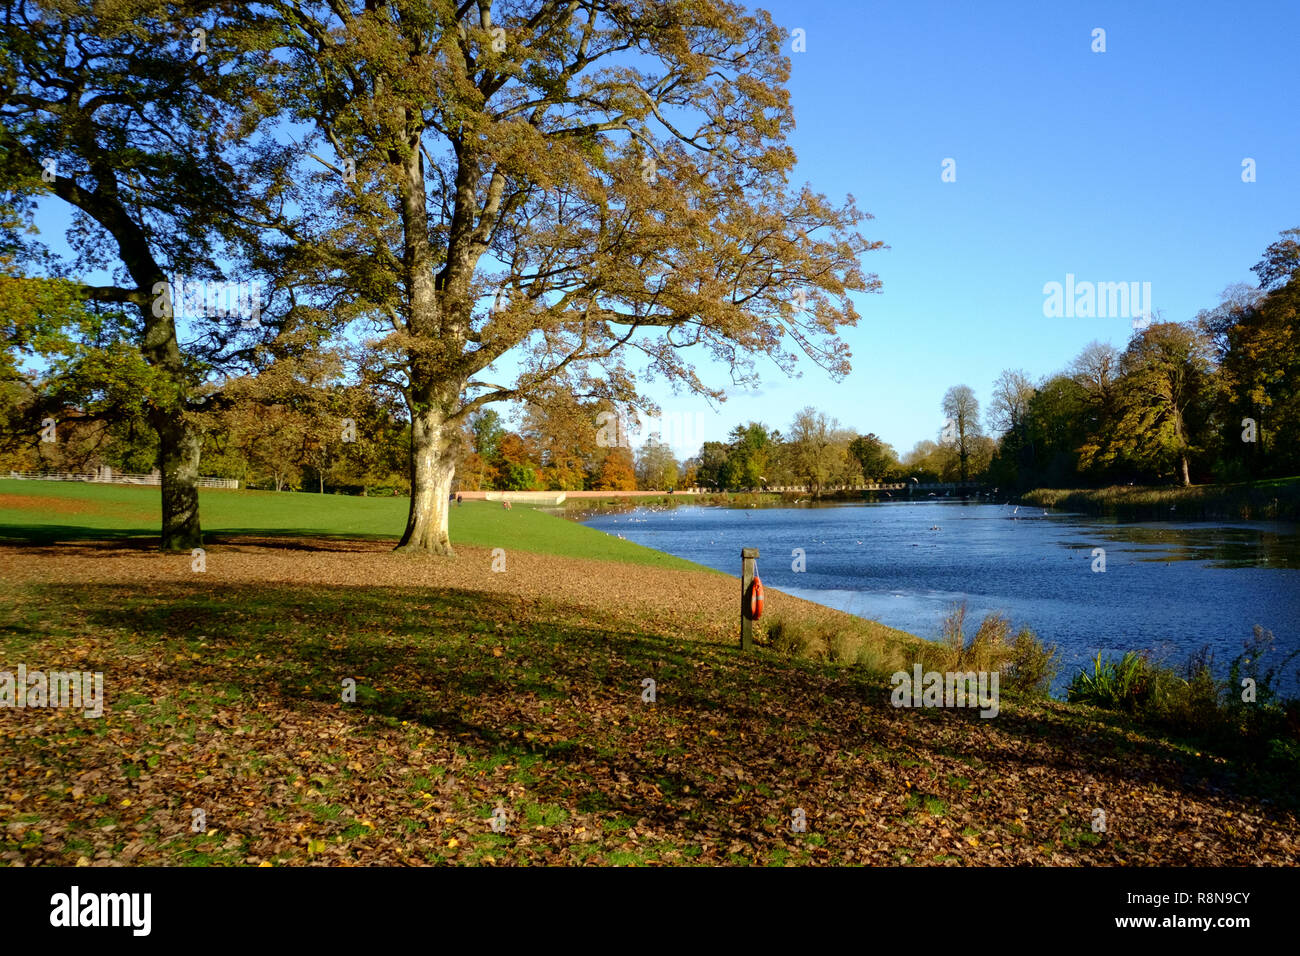 The Lake in Lydiard Park, Swindon Stock Photo